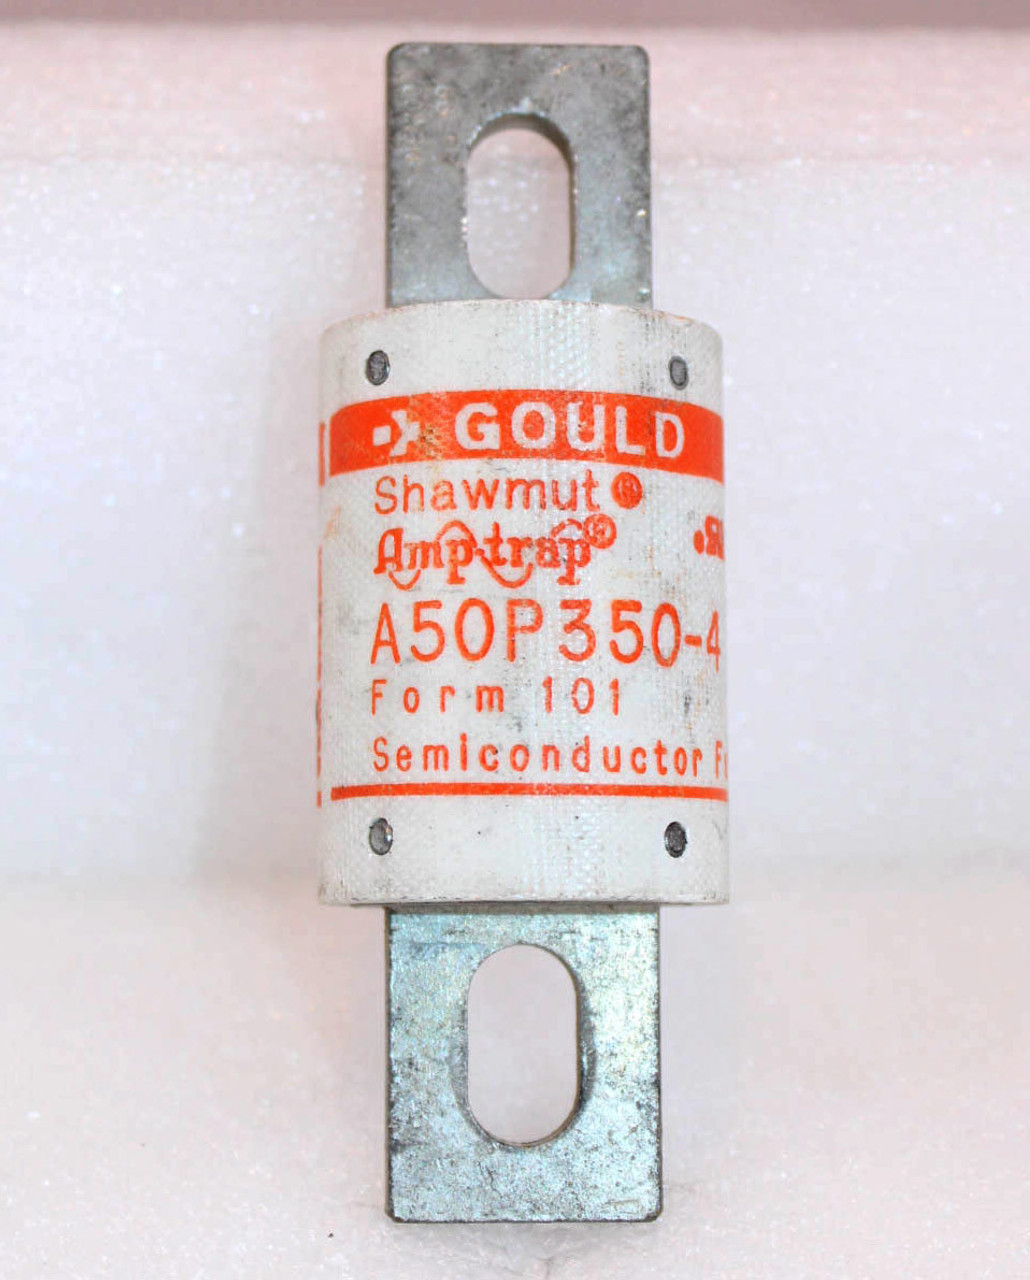 Gould Shawmut A50P350-4 Amp-trap Semiconductor Fuse 350A 500V Form 101